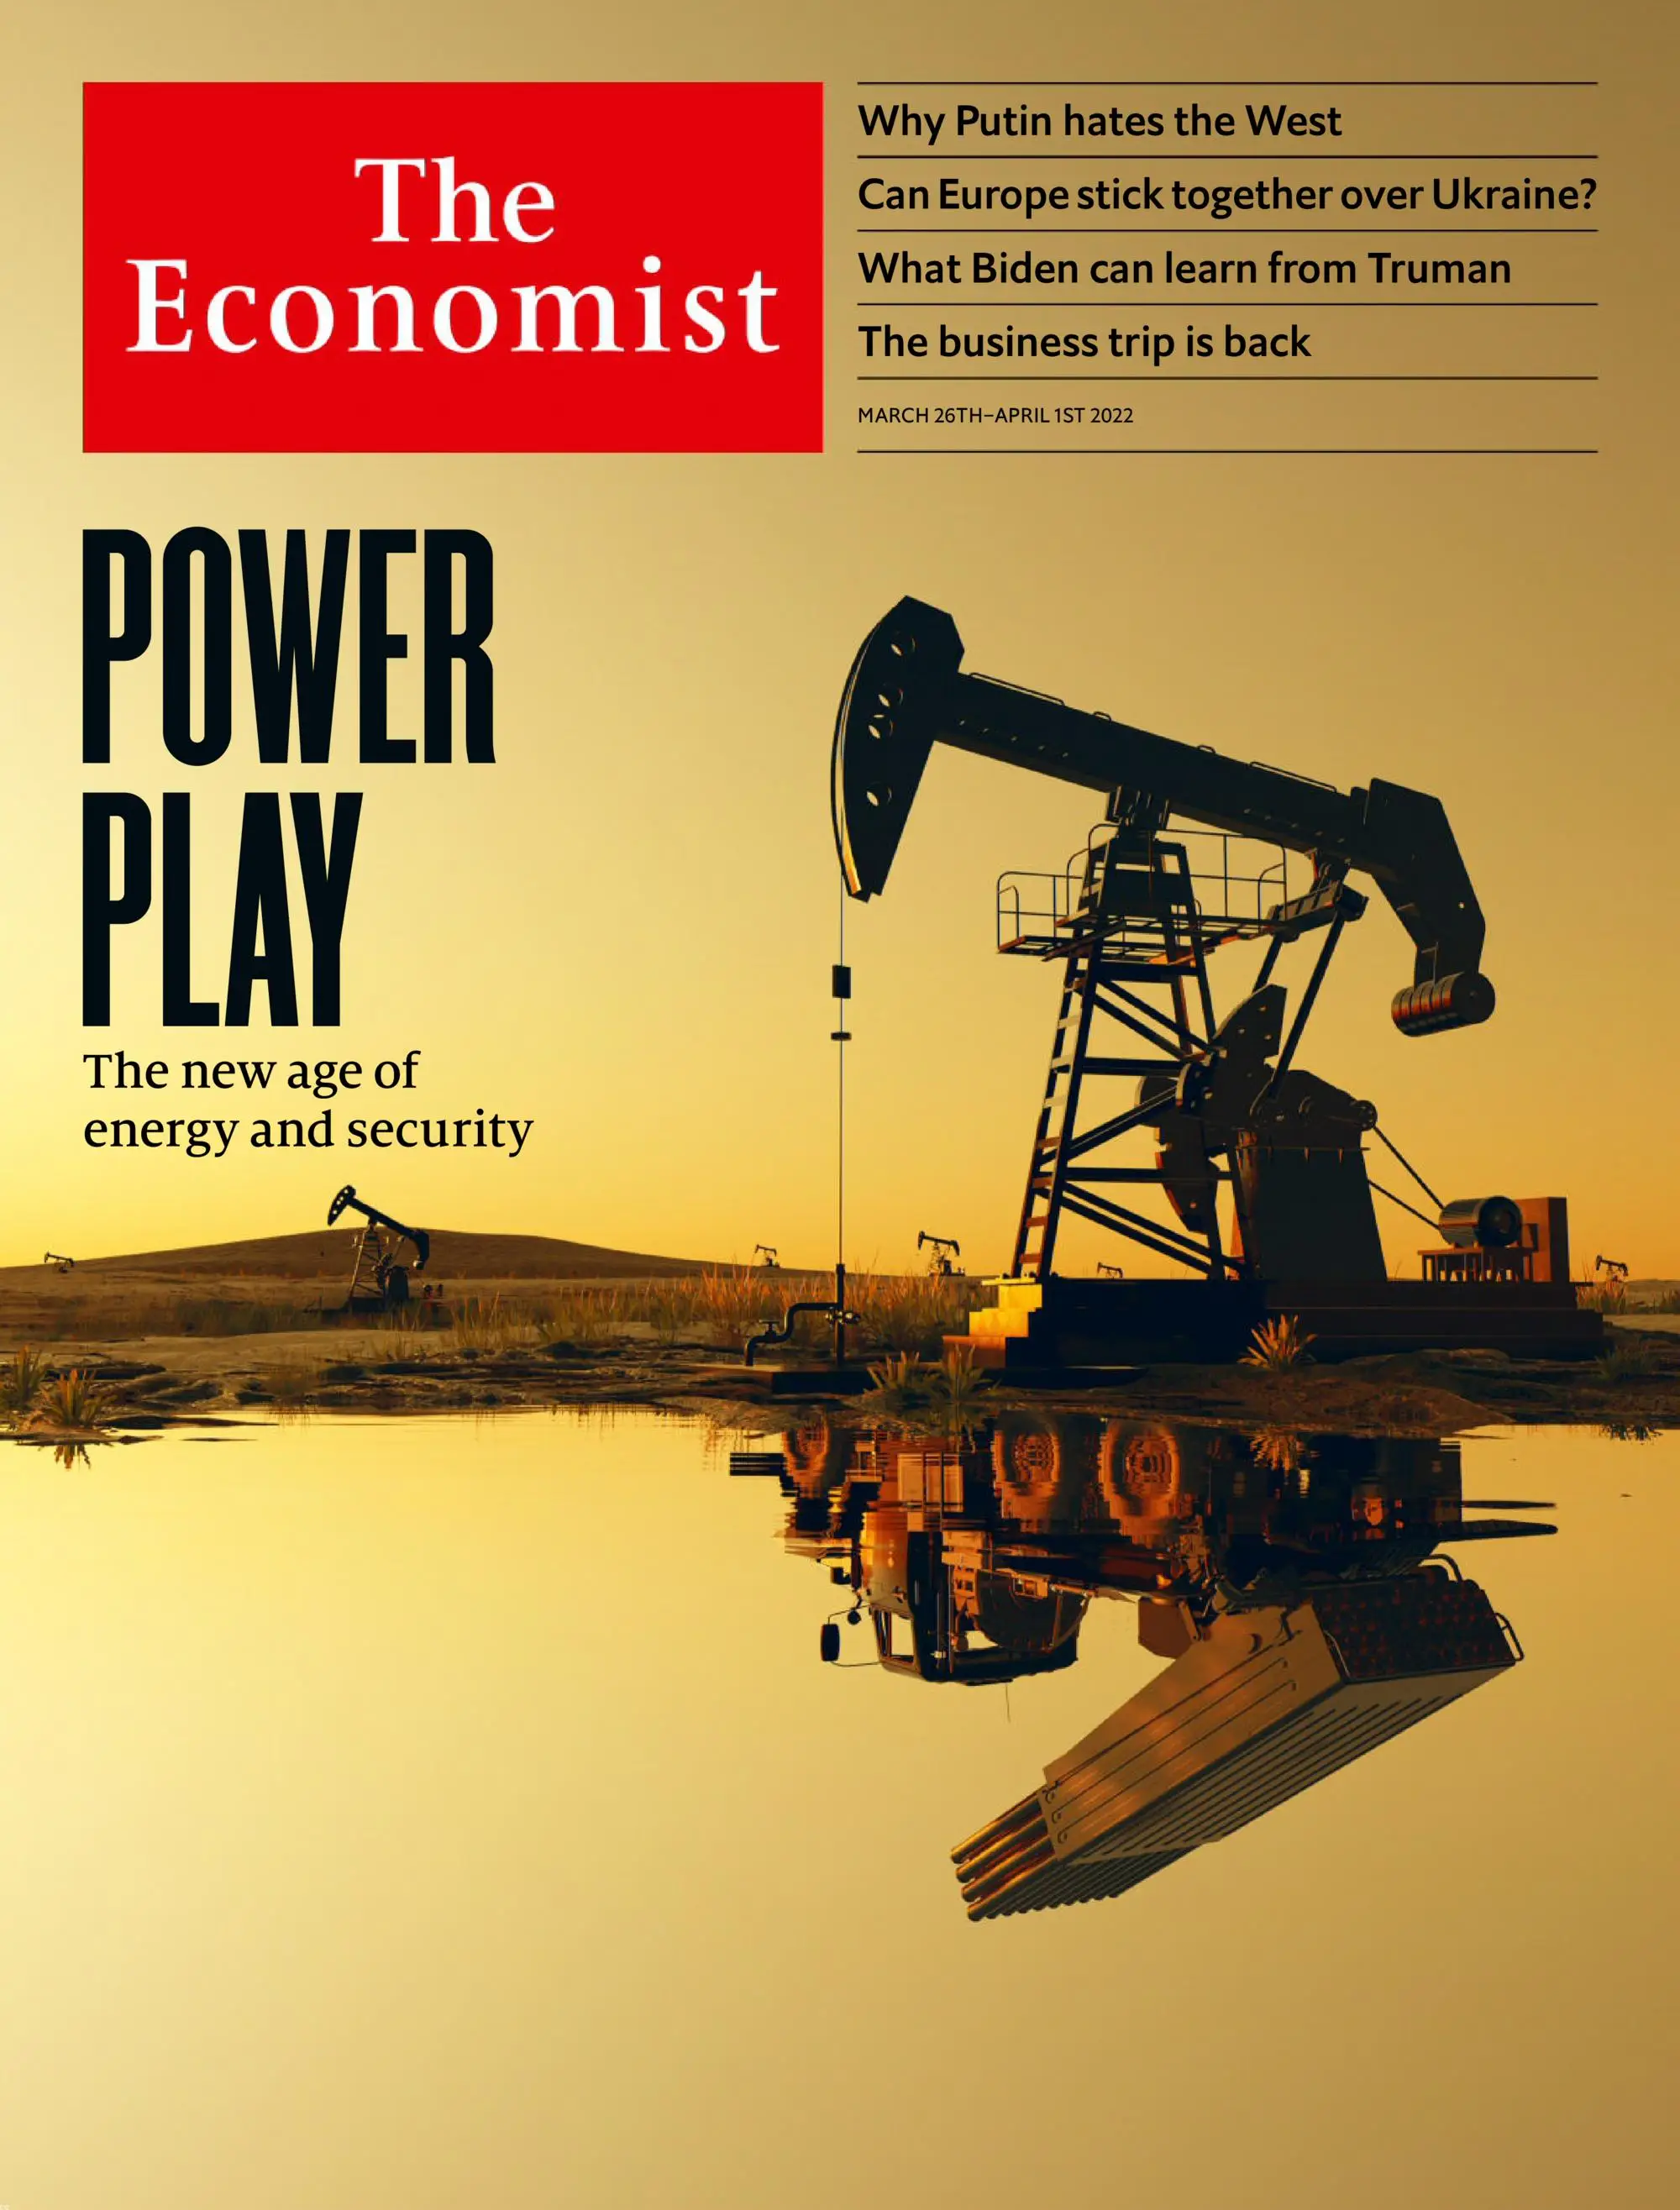 Обложка экономист 2024 март. The Economist 2022 обложка. Обложка журнала the Economist. Журнал the Economist 2022. Новая обложка the Economist.